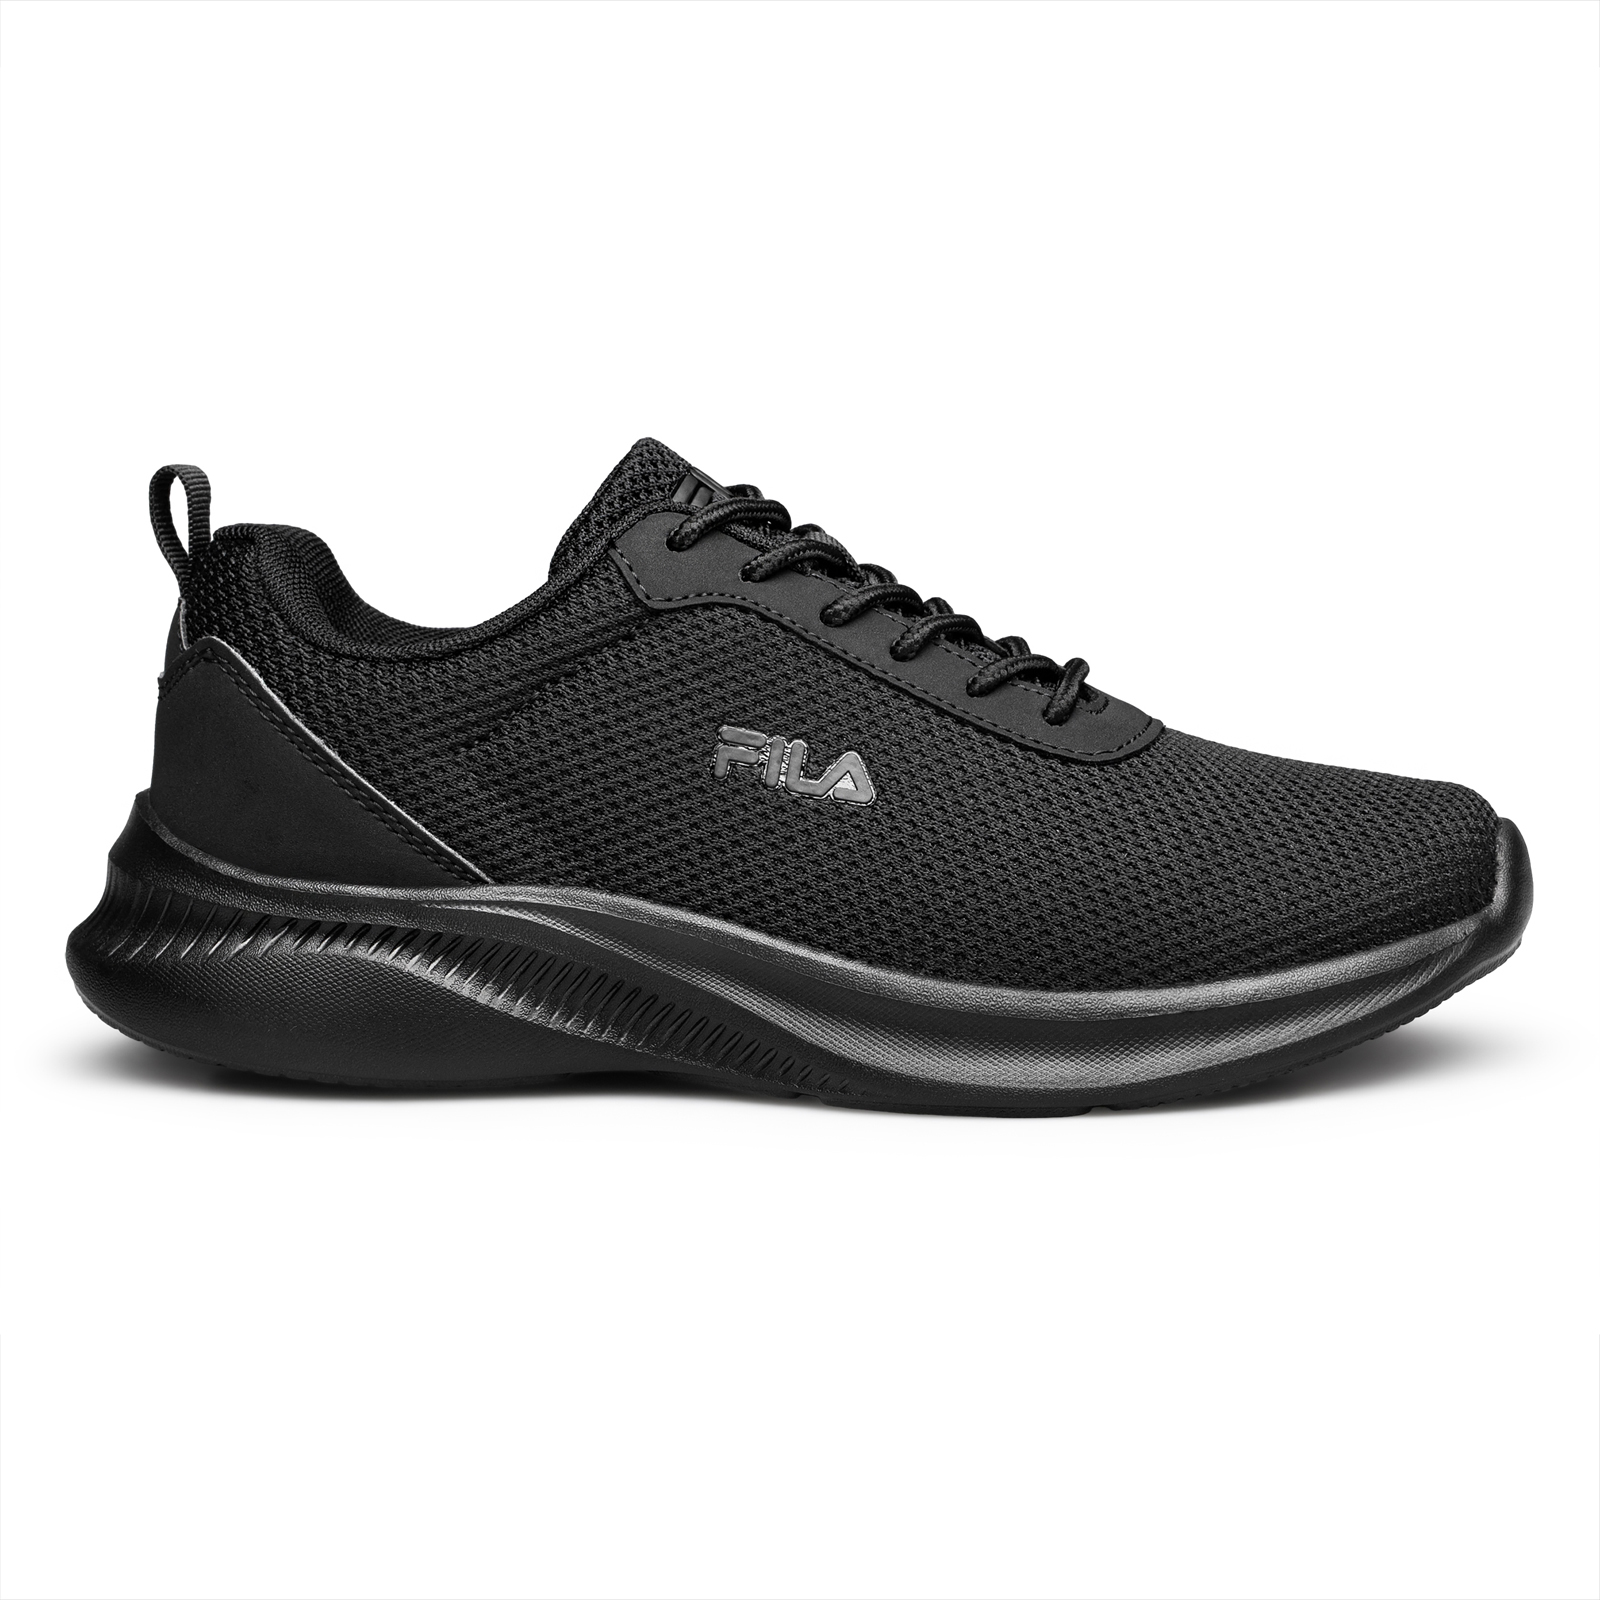 Fila - DORADO 2 LACE FOOTWEAR - BLACK Παιδικά > Παπούτσια > Αθλητικά > Παπούτσι Low Cut